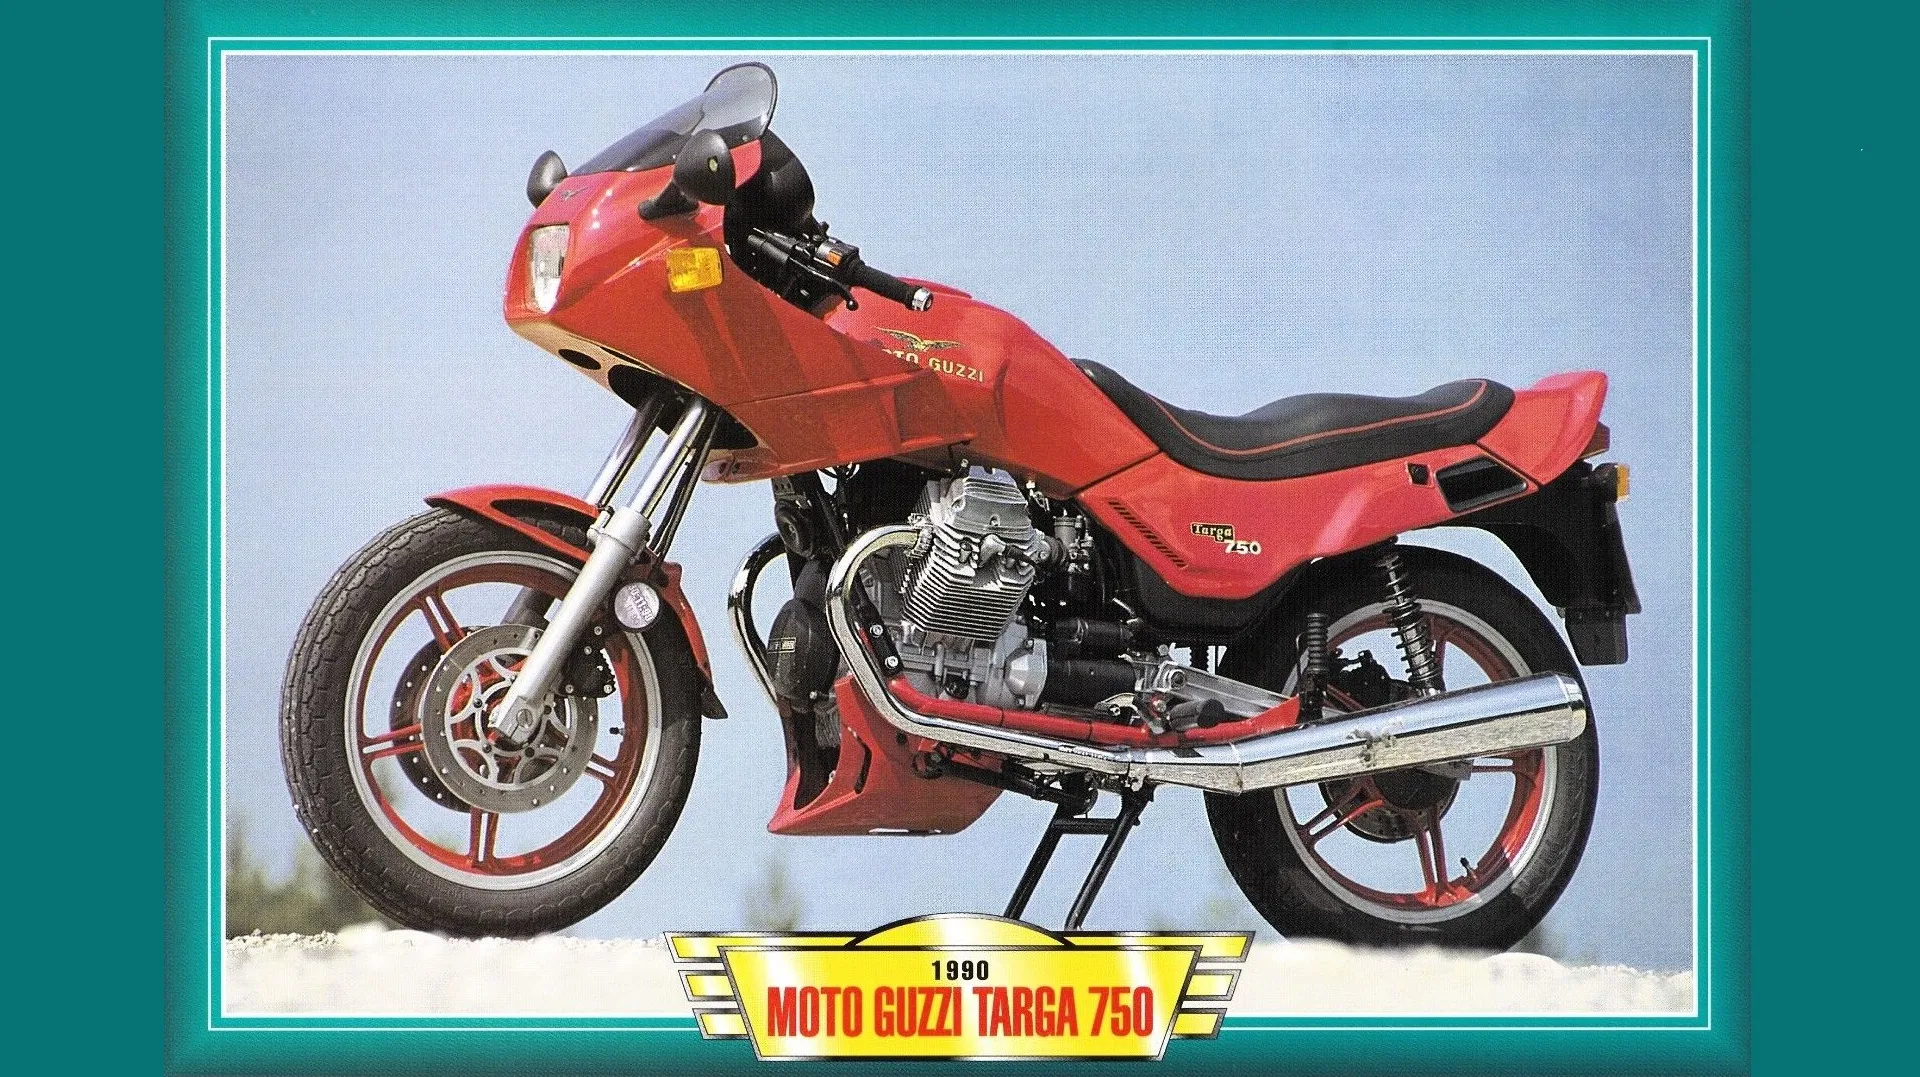 Moto del día: Moto Guzzi Targa 750